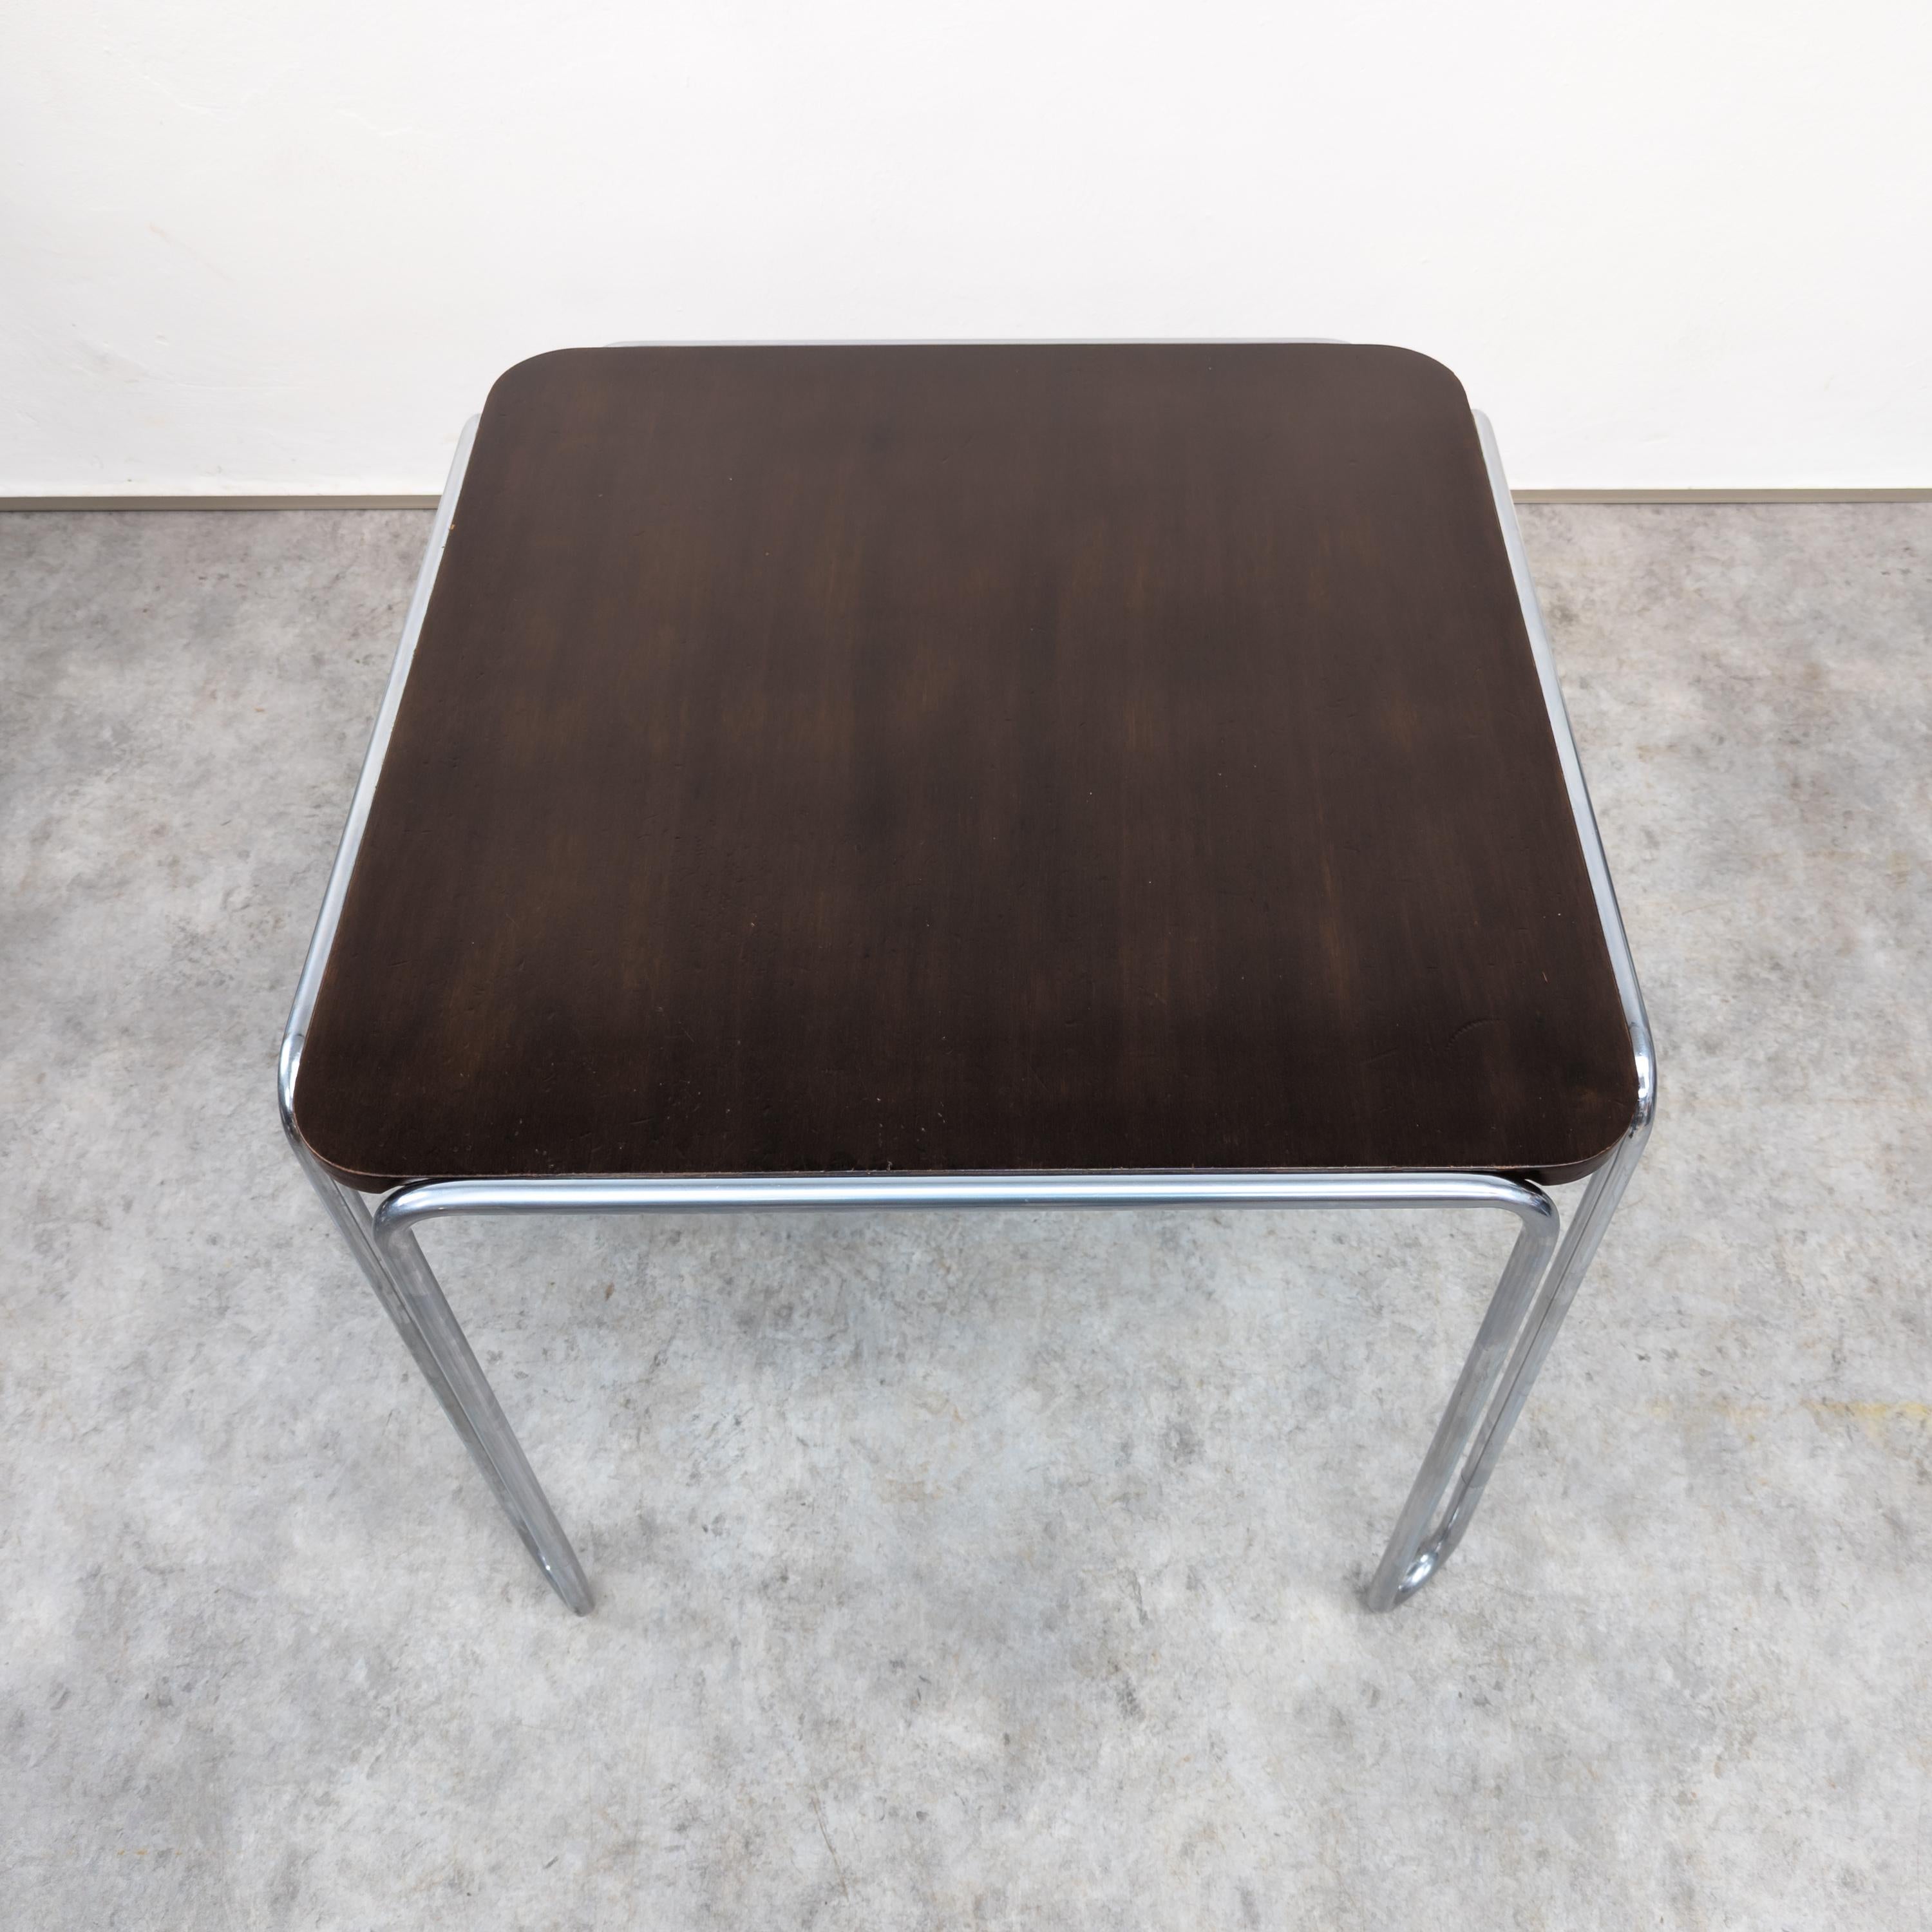 Thonet B 10 tubular steel table by Marcel Breuer  For Sale 2